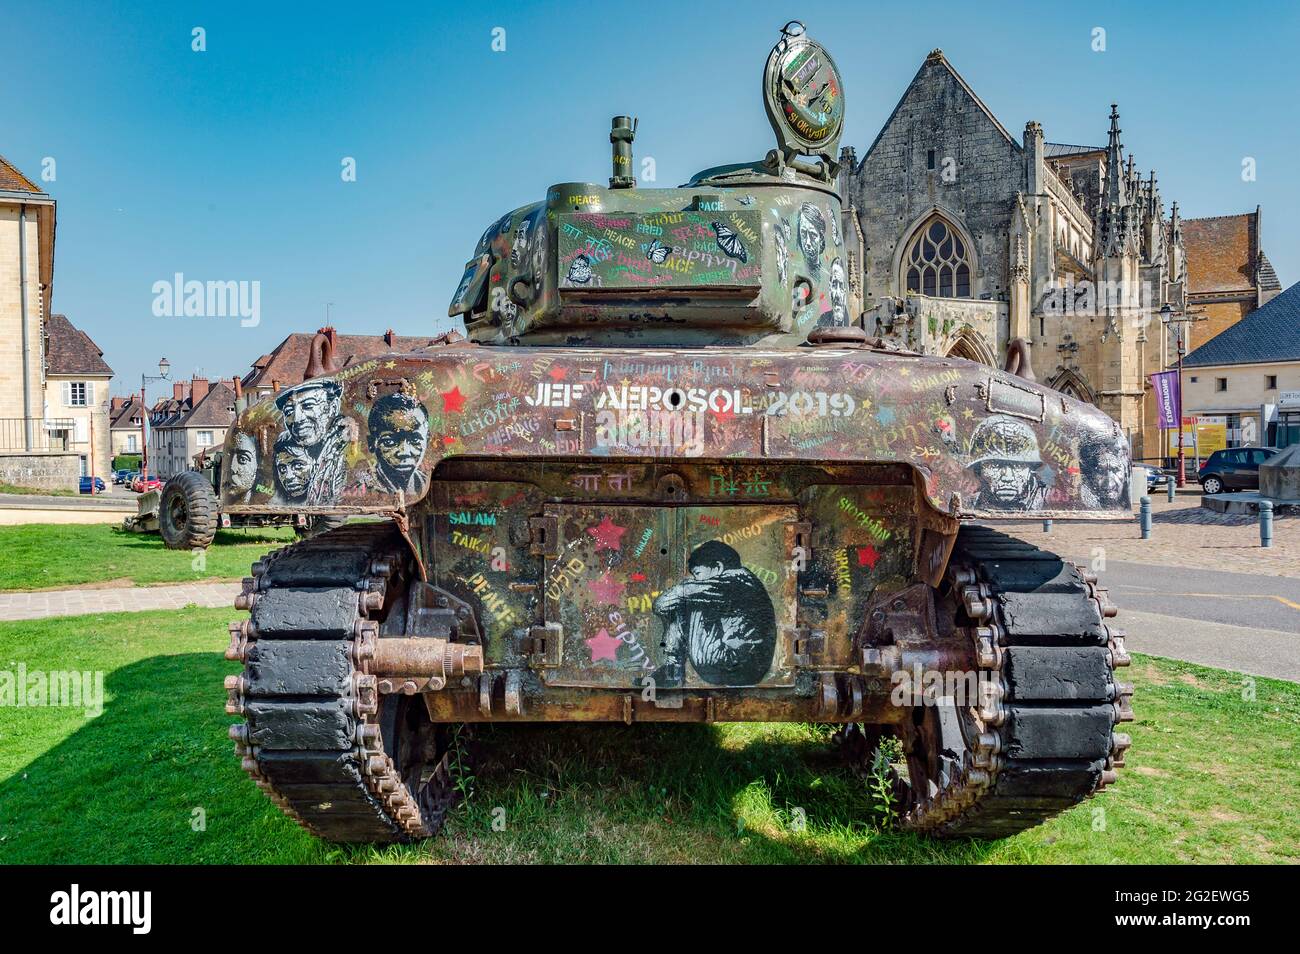 Das Mémorial de Falaise - La Guerre des civils erinnert an das tägliche Leben während des Weltkrieges 2. JEF Aerosol lackierte den historischen Panzer vor dem Museum. Stockfoto